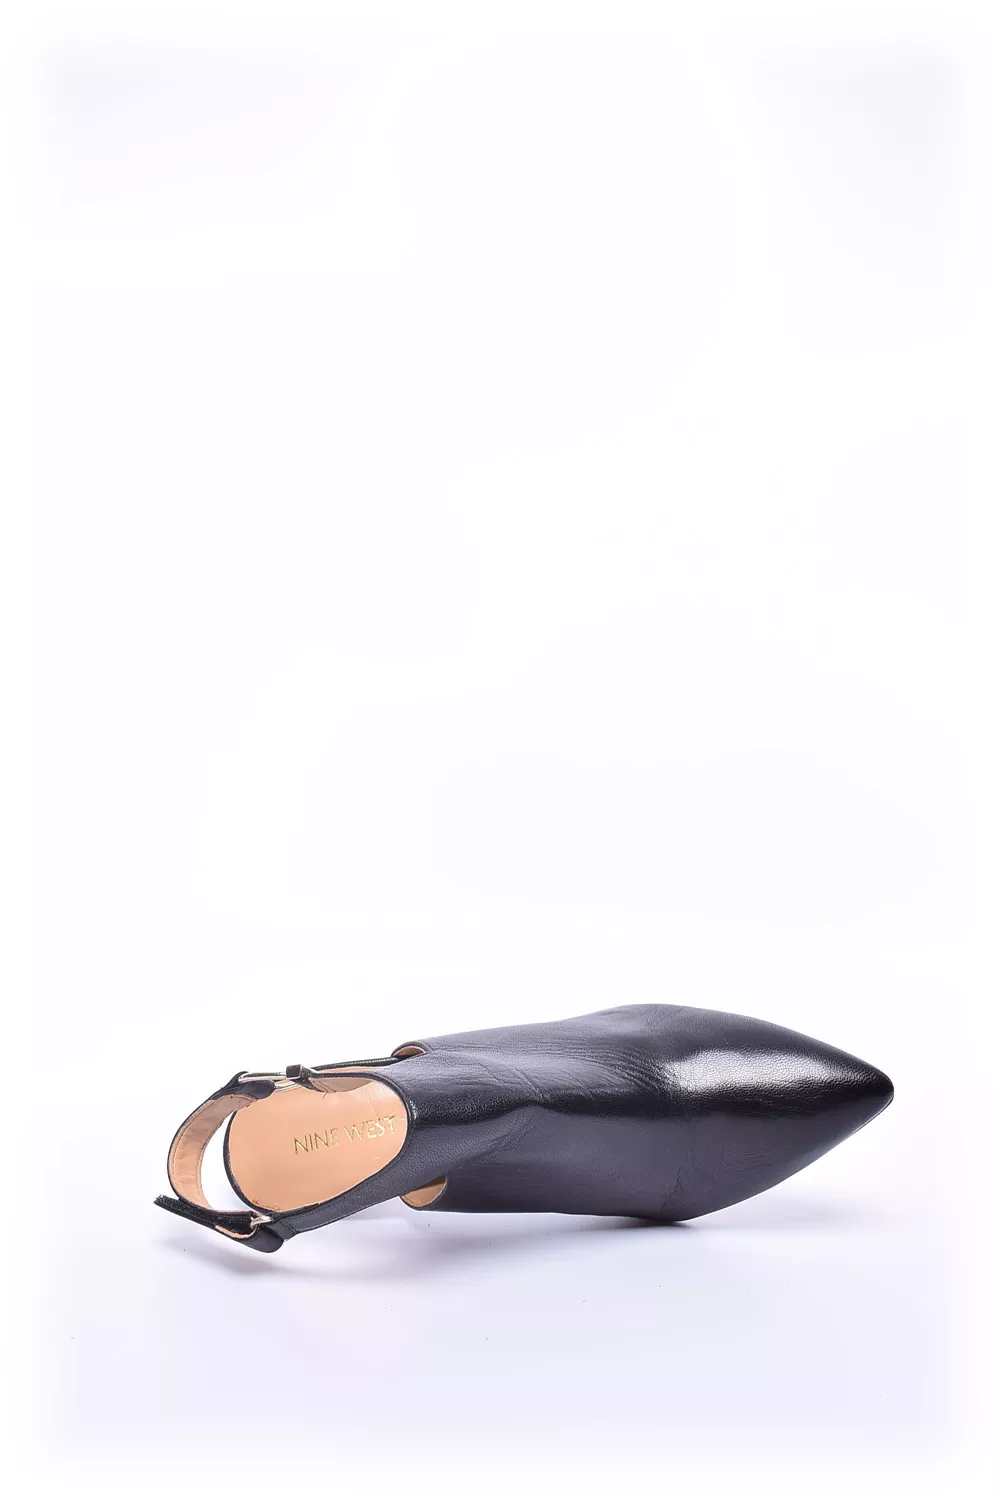 Sandale stiletto dama [5]